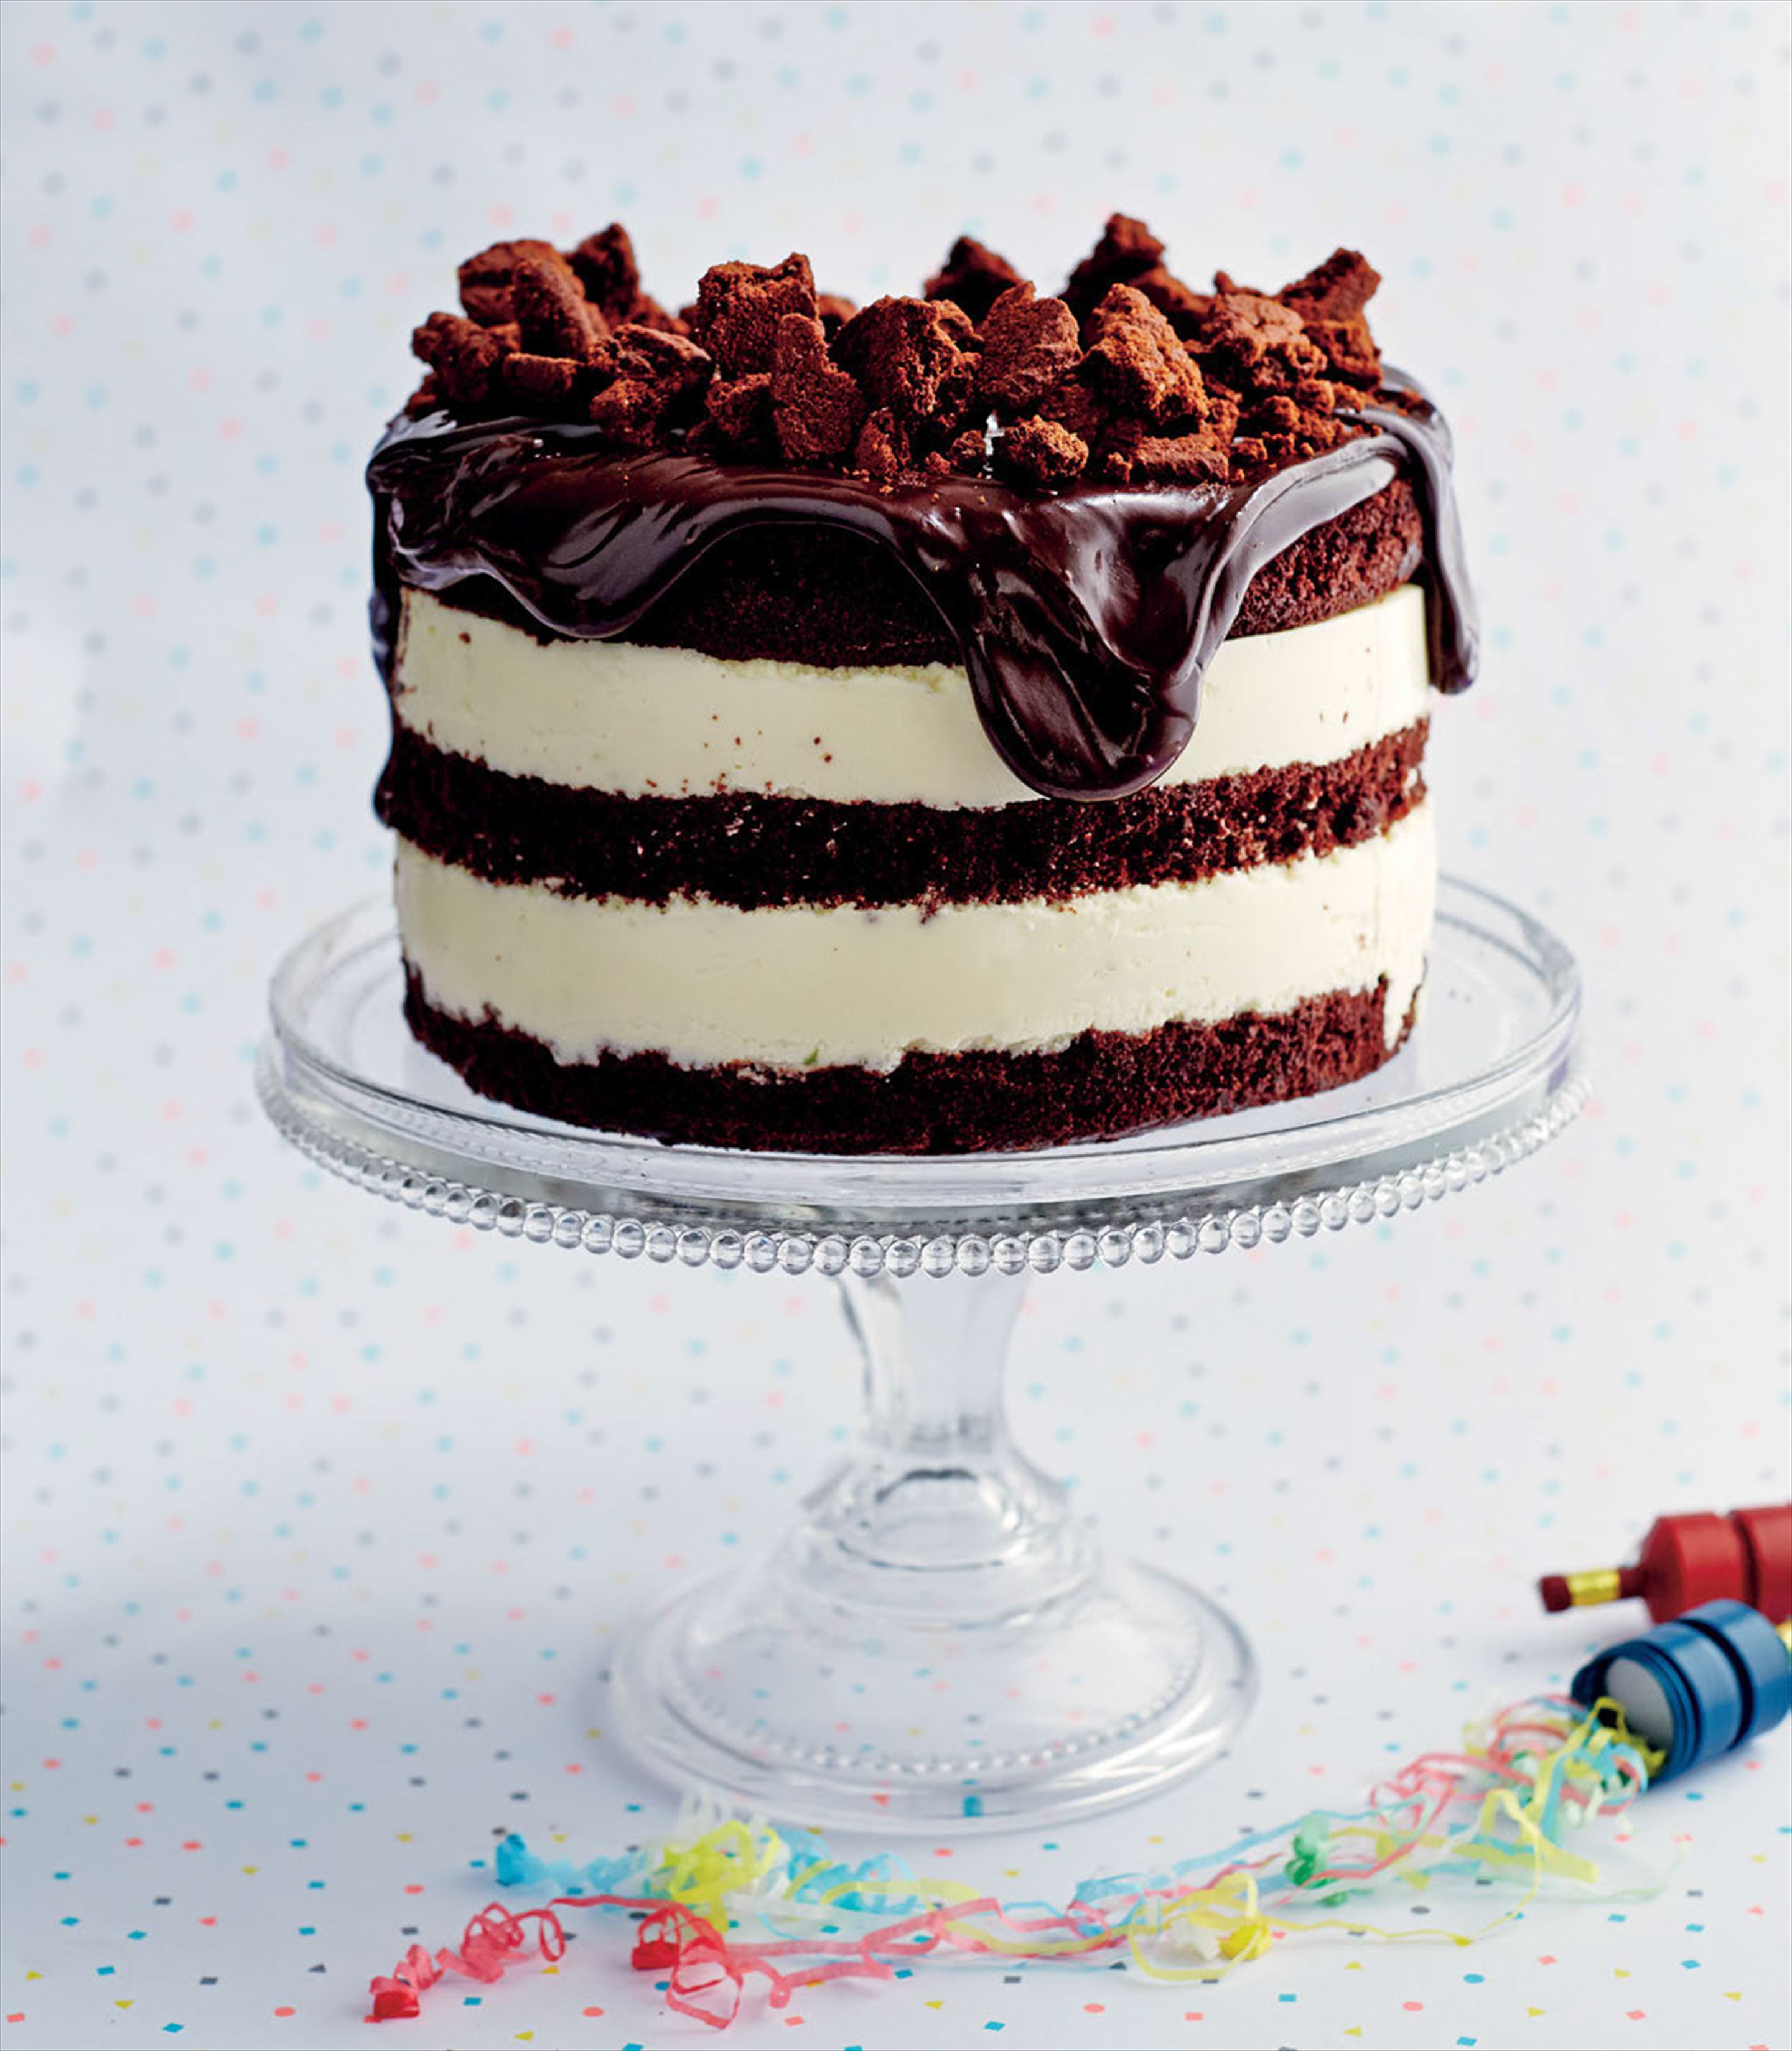 Chocolate lime cheesecake layer cake